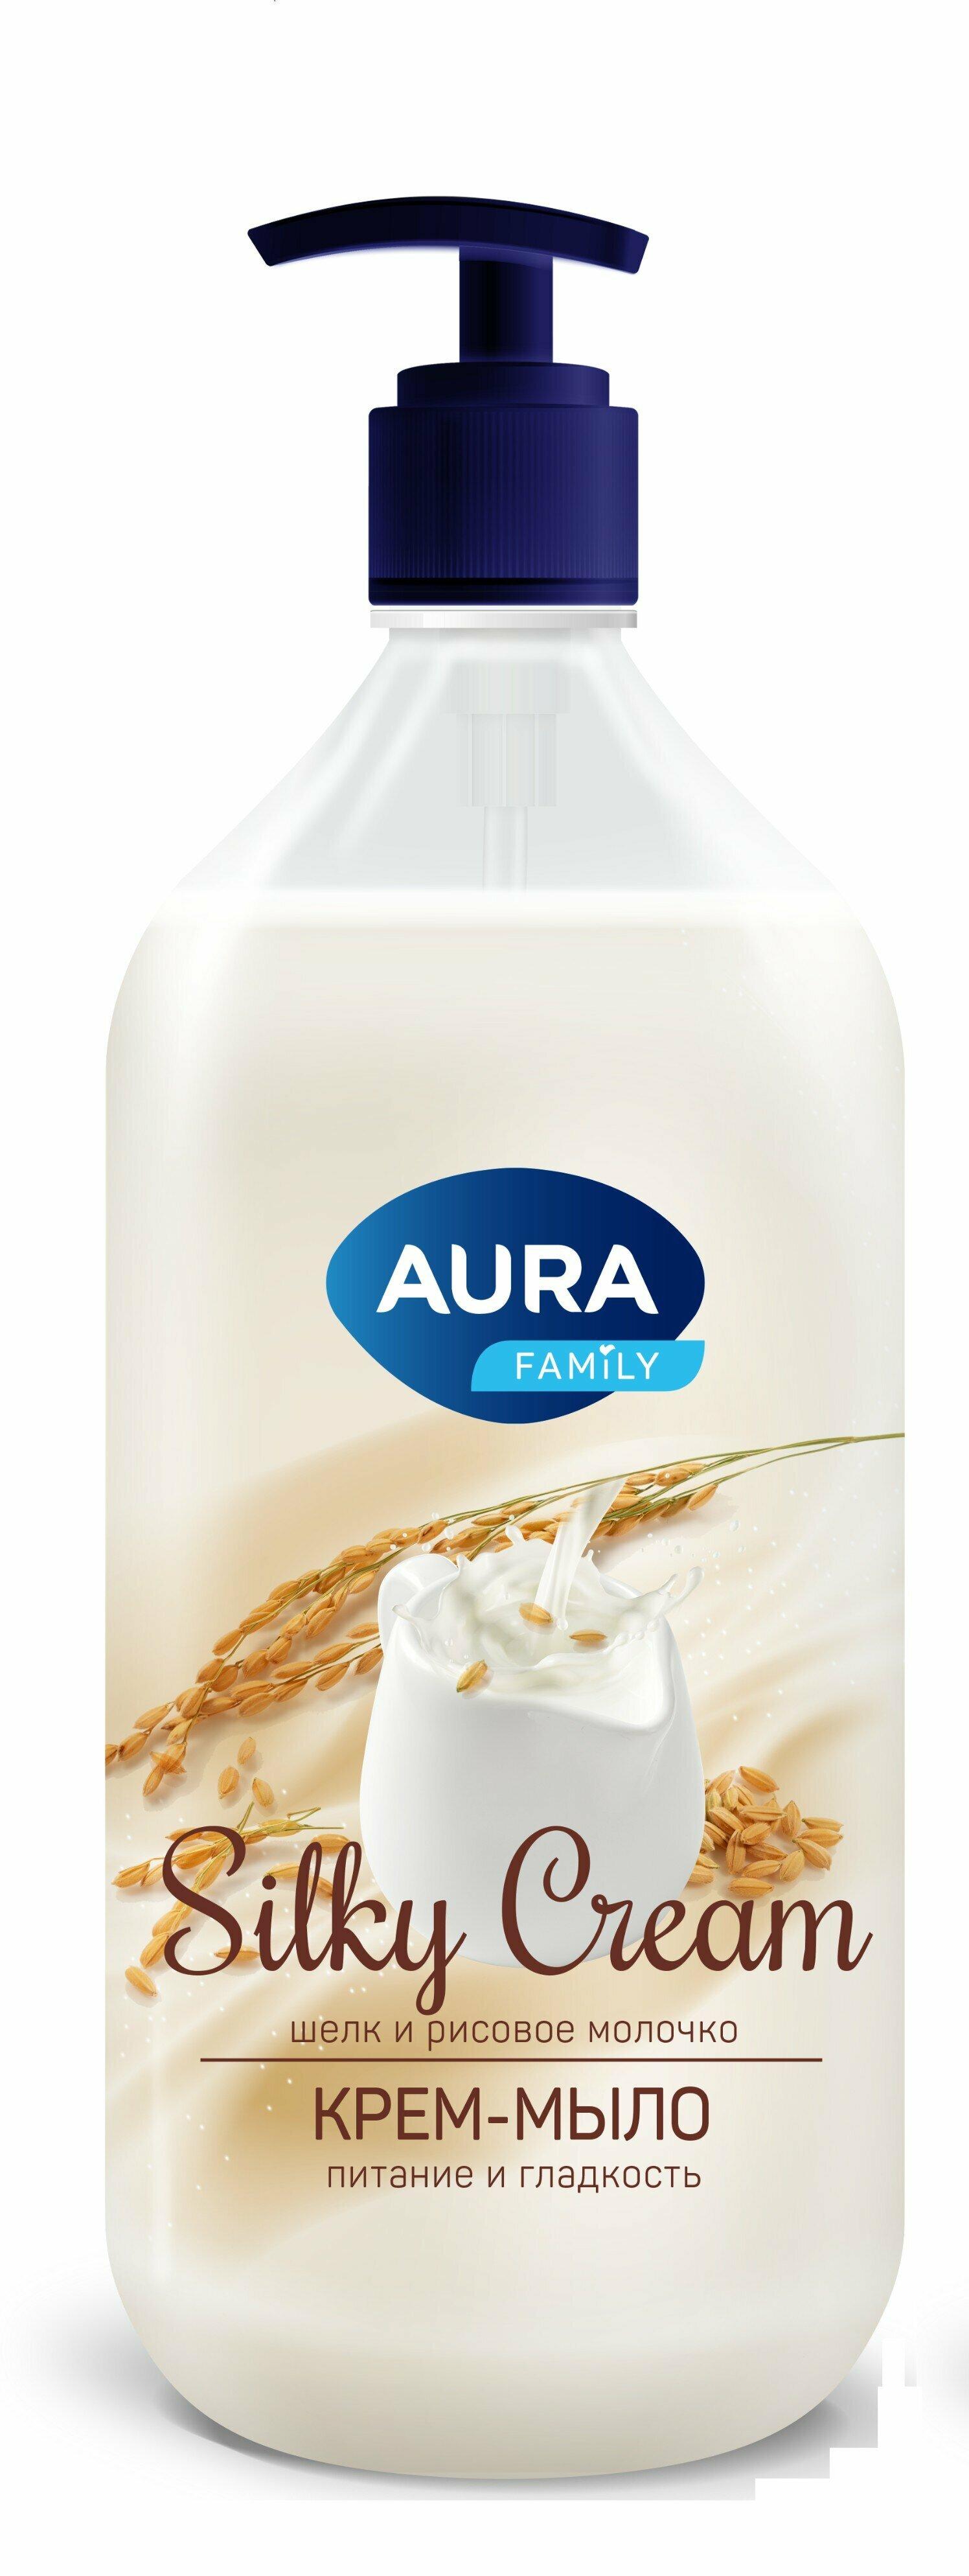 Крем мыло для рук и тела Aura Family Silky Cream Шелк и рисовое молочко 1 л., флакон с дозатором